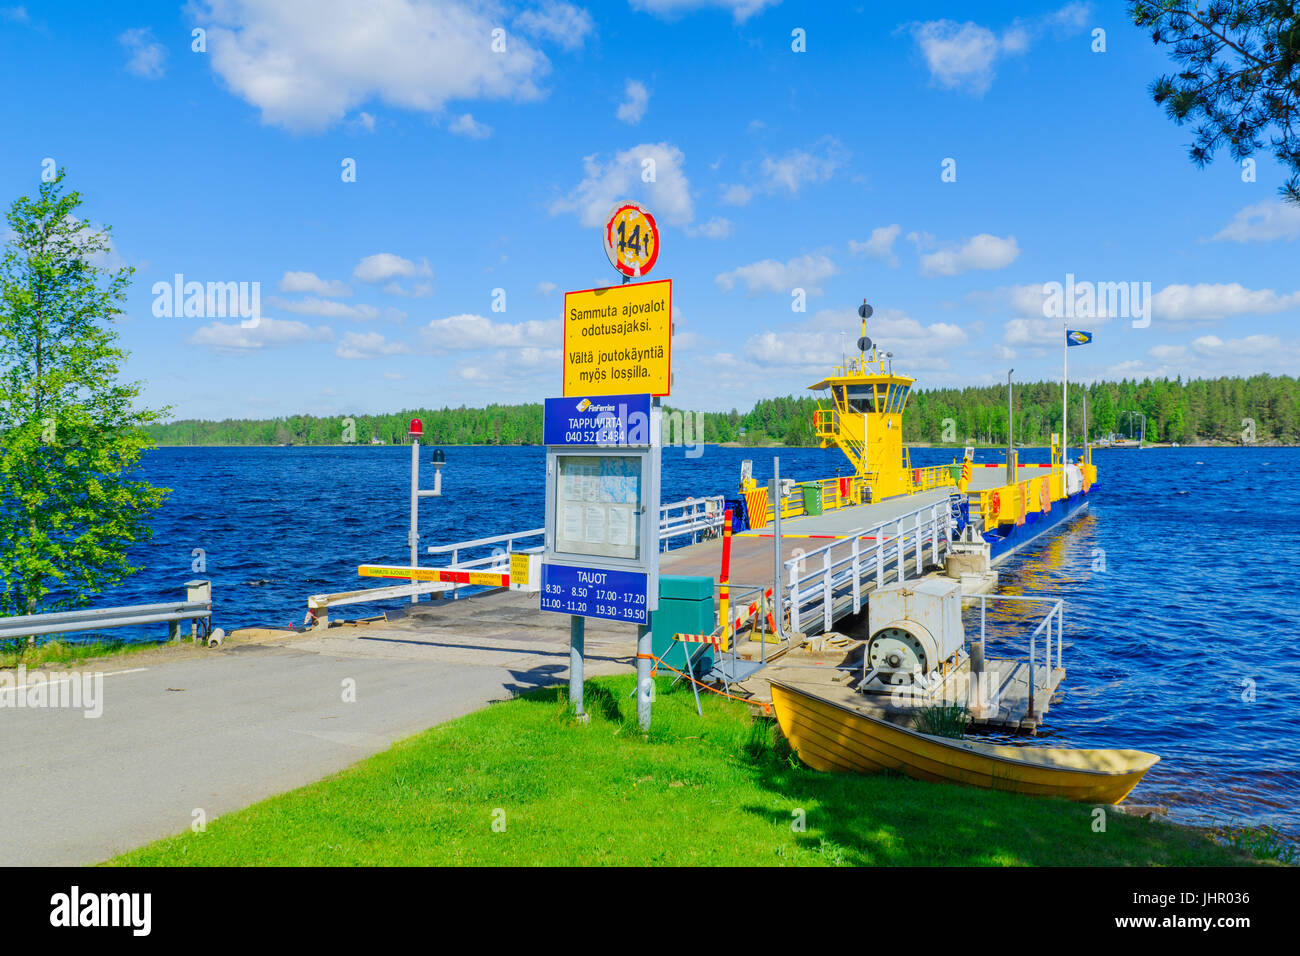 TAPPUVIRTA, FINLAND - JUNE 19, 2017: View of the car ferry in Tappuvirta, Sothern Savonia, Lakeland region, Finland Stock Photo